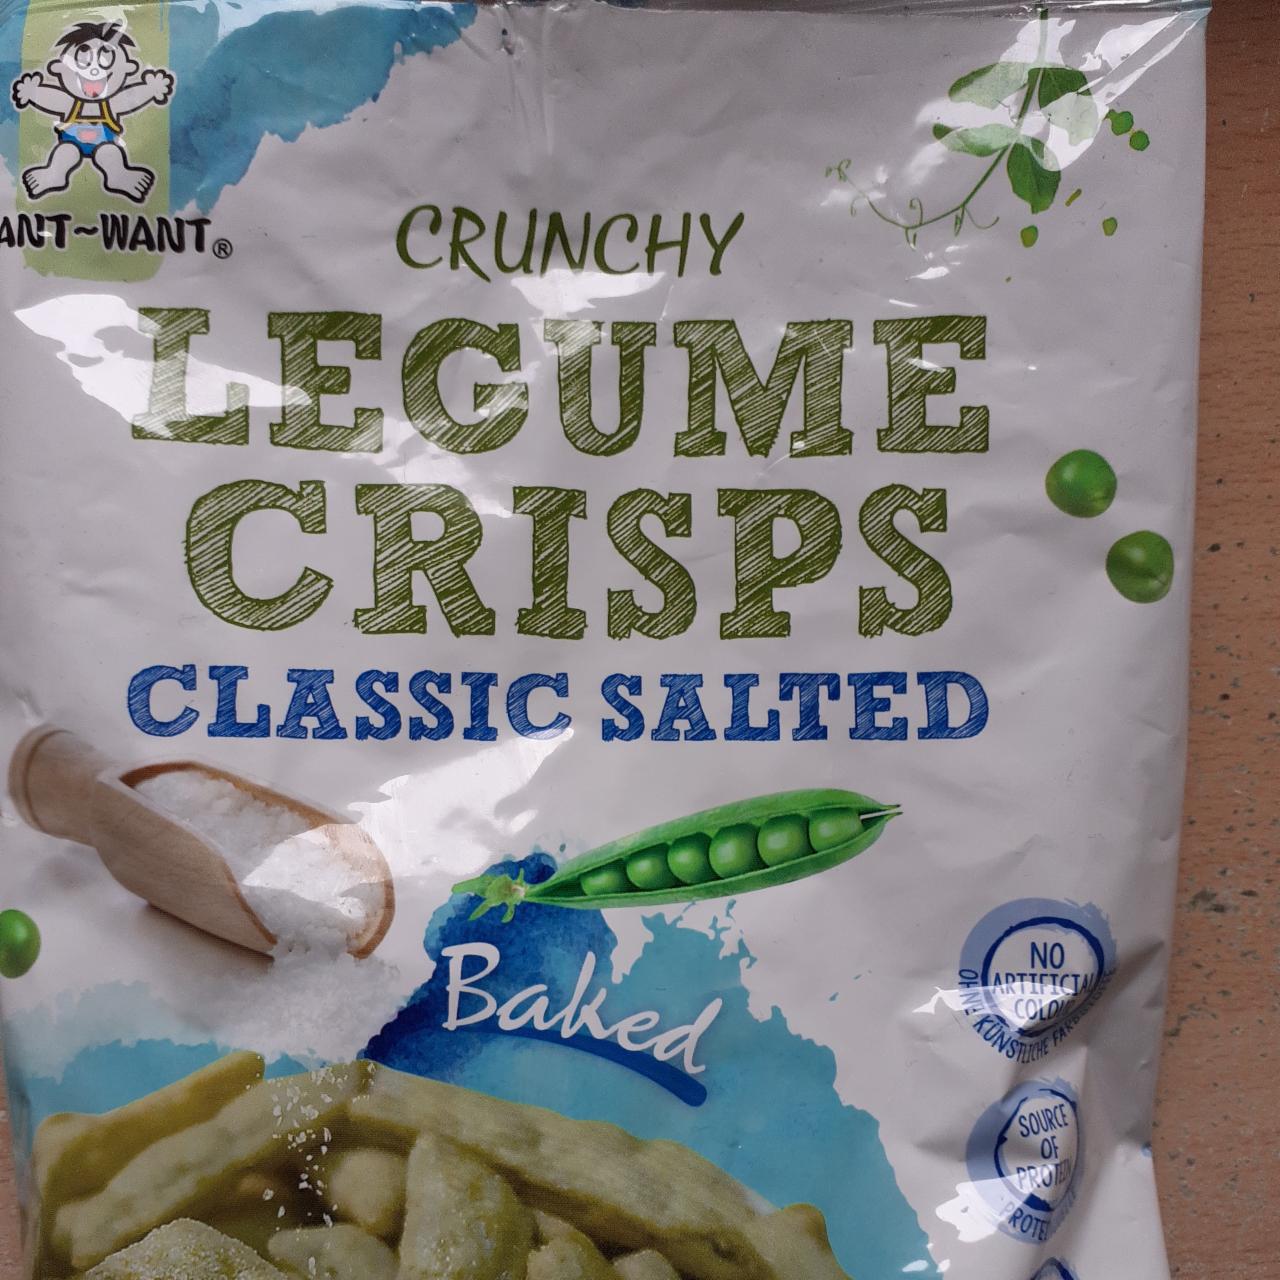 Fotografie - Crunchy Legume crisps classic salted baked Want Want